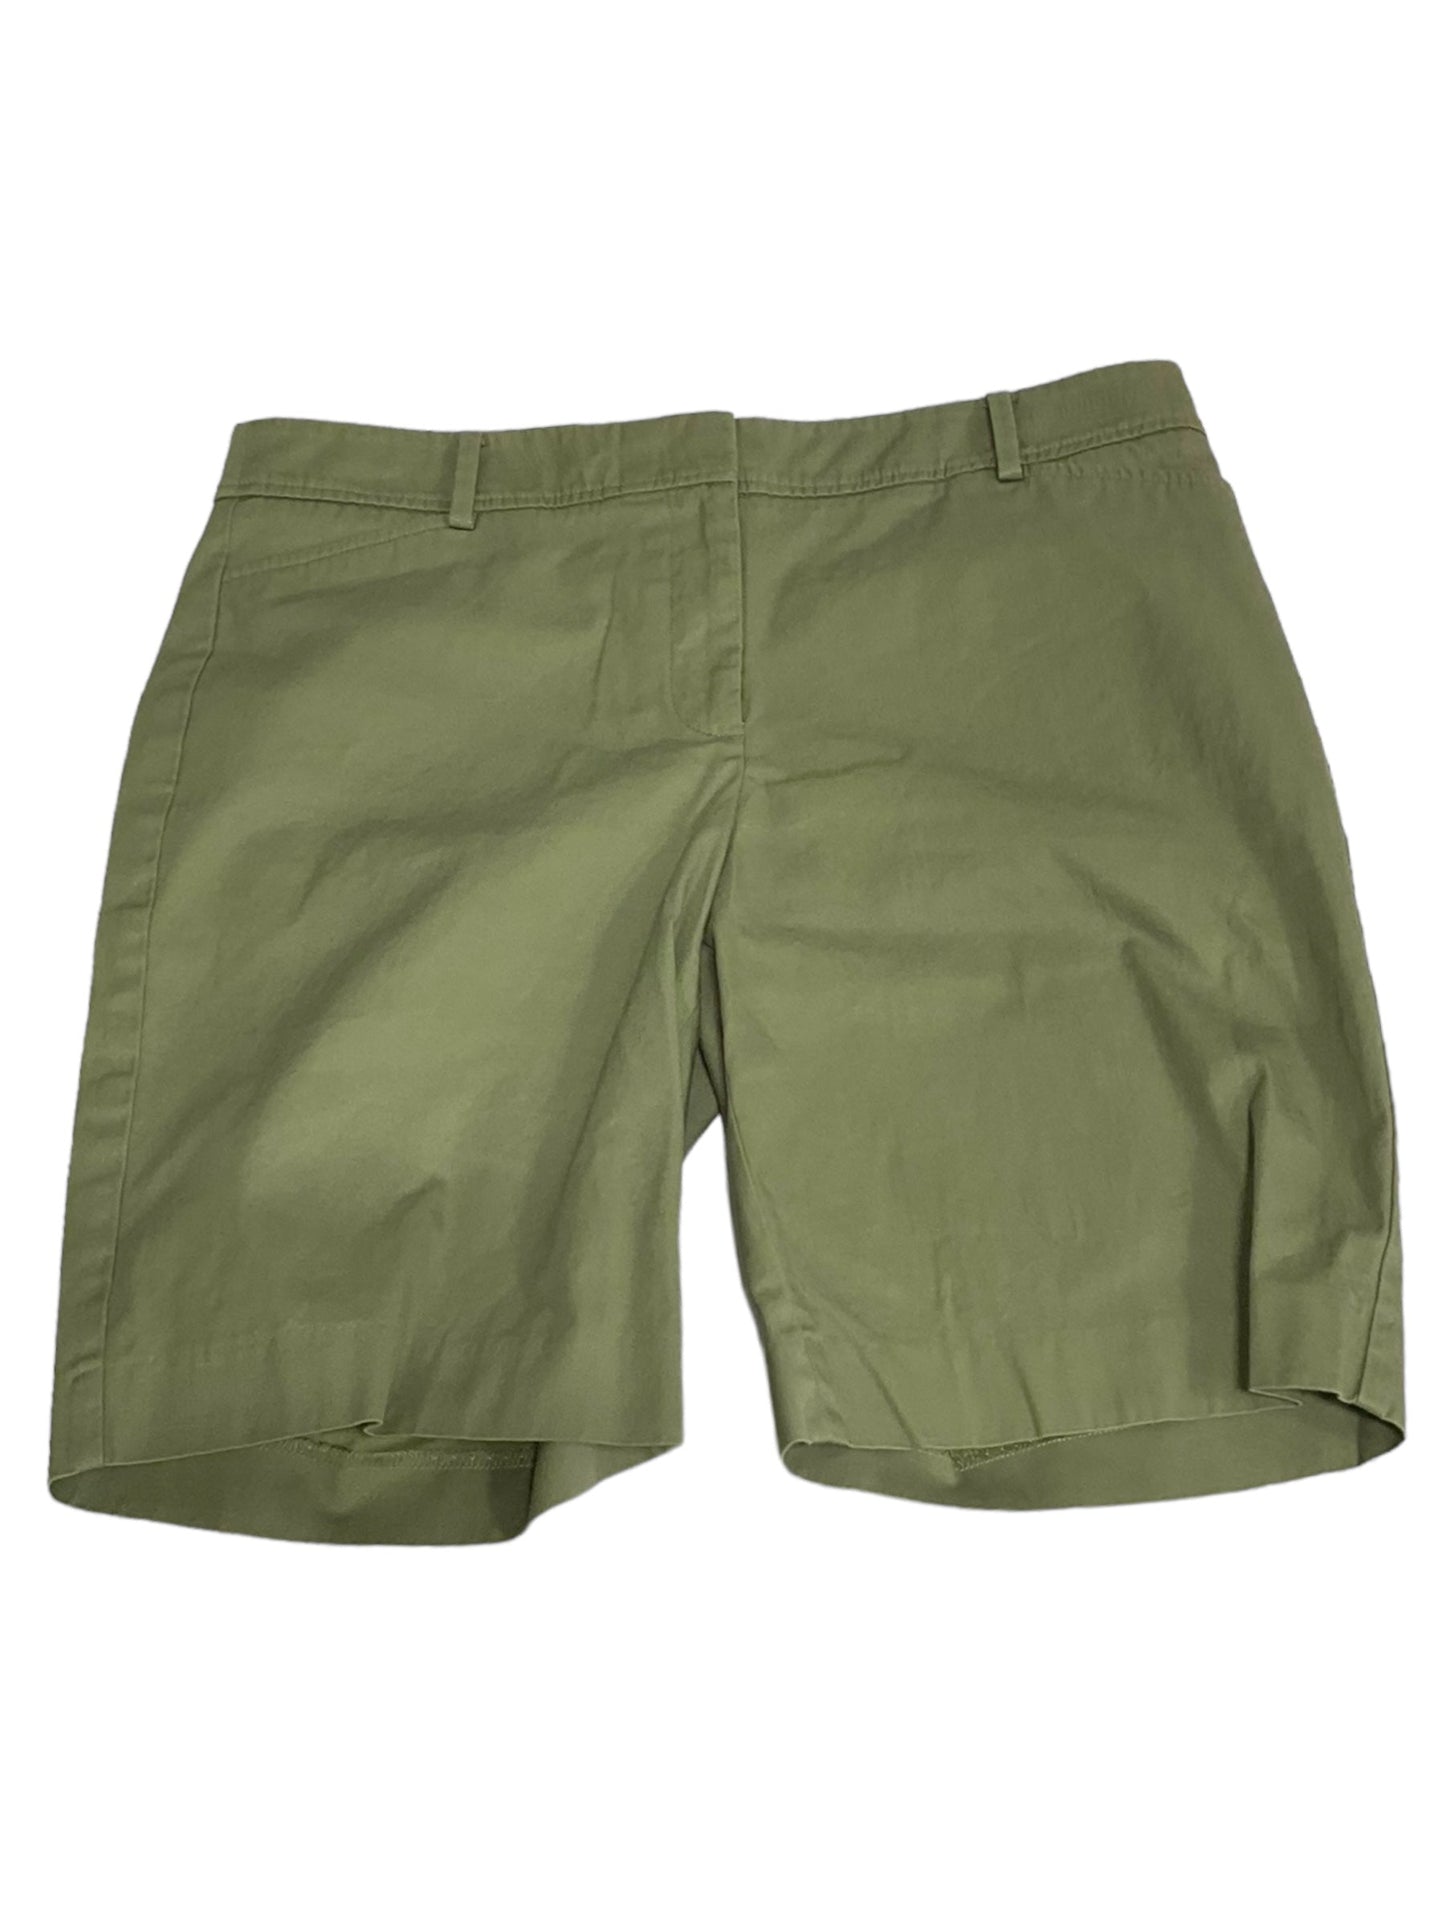 Green Shorts Talbots, Size 12